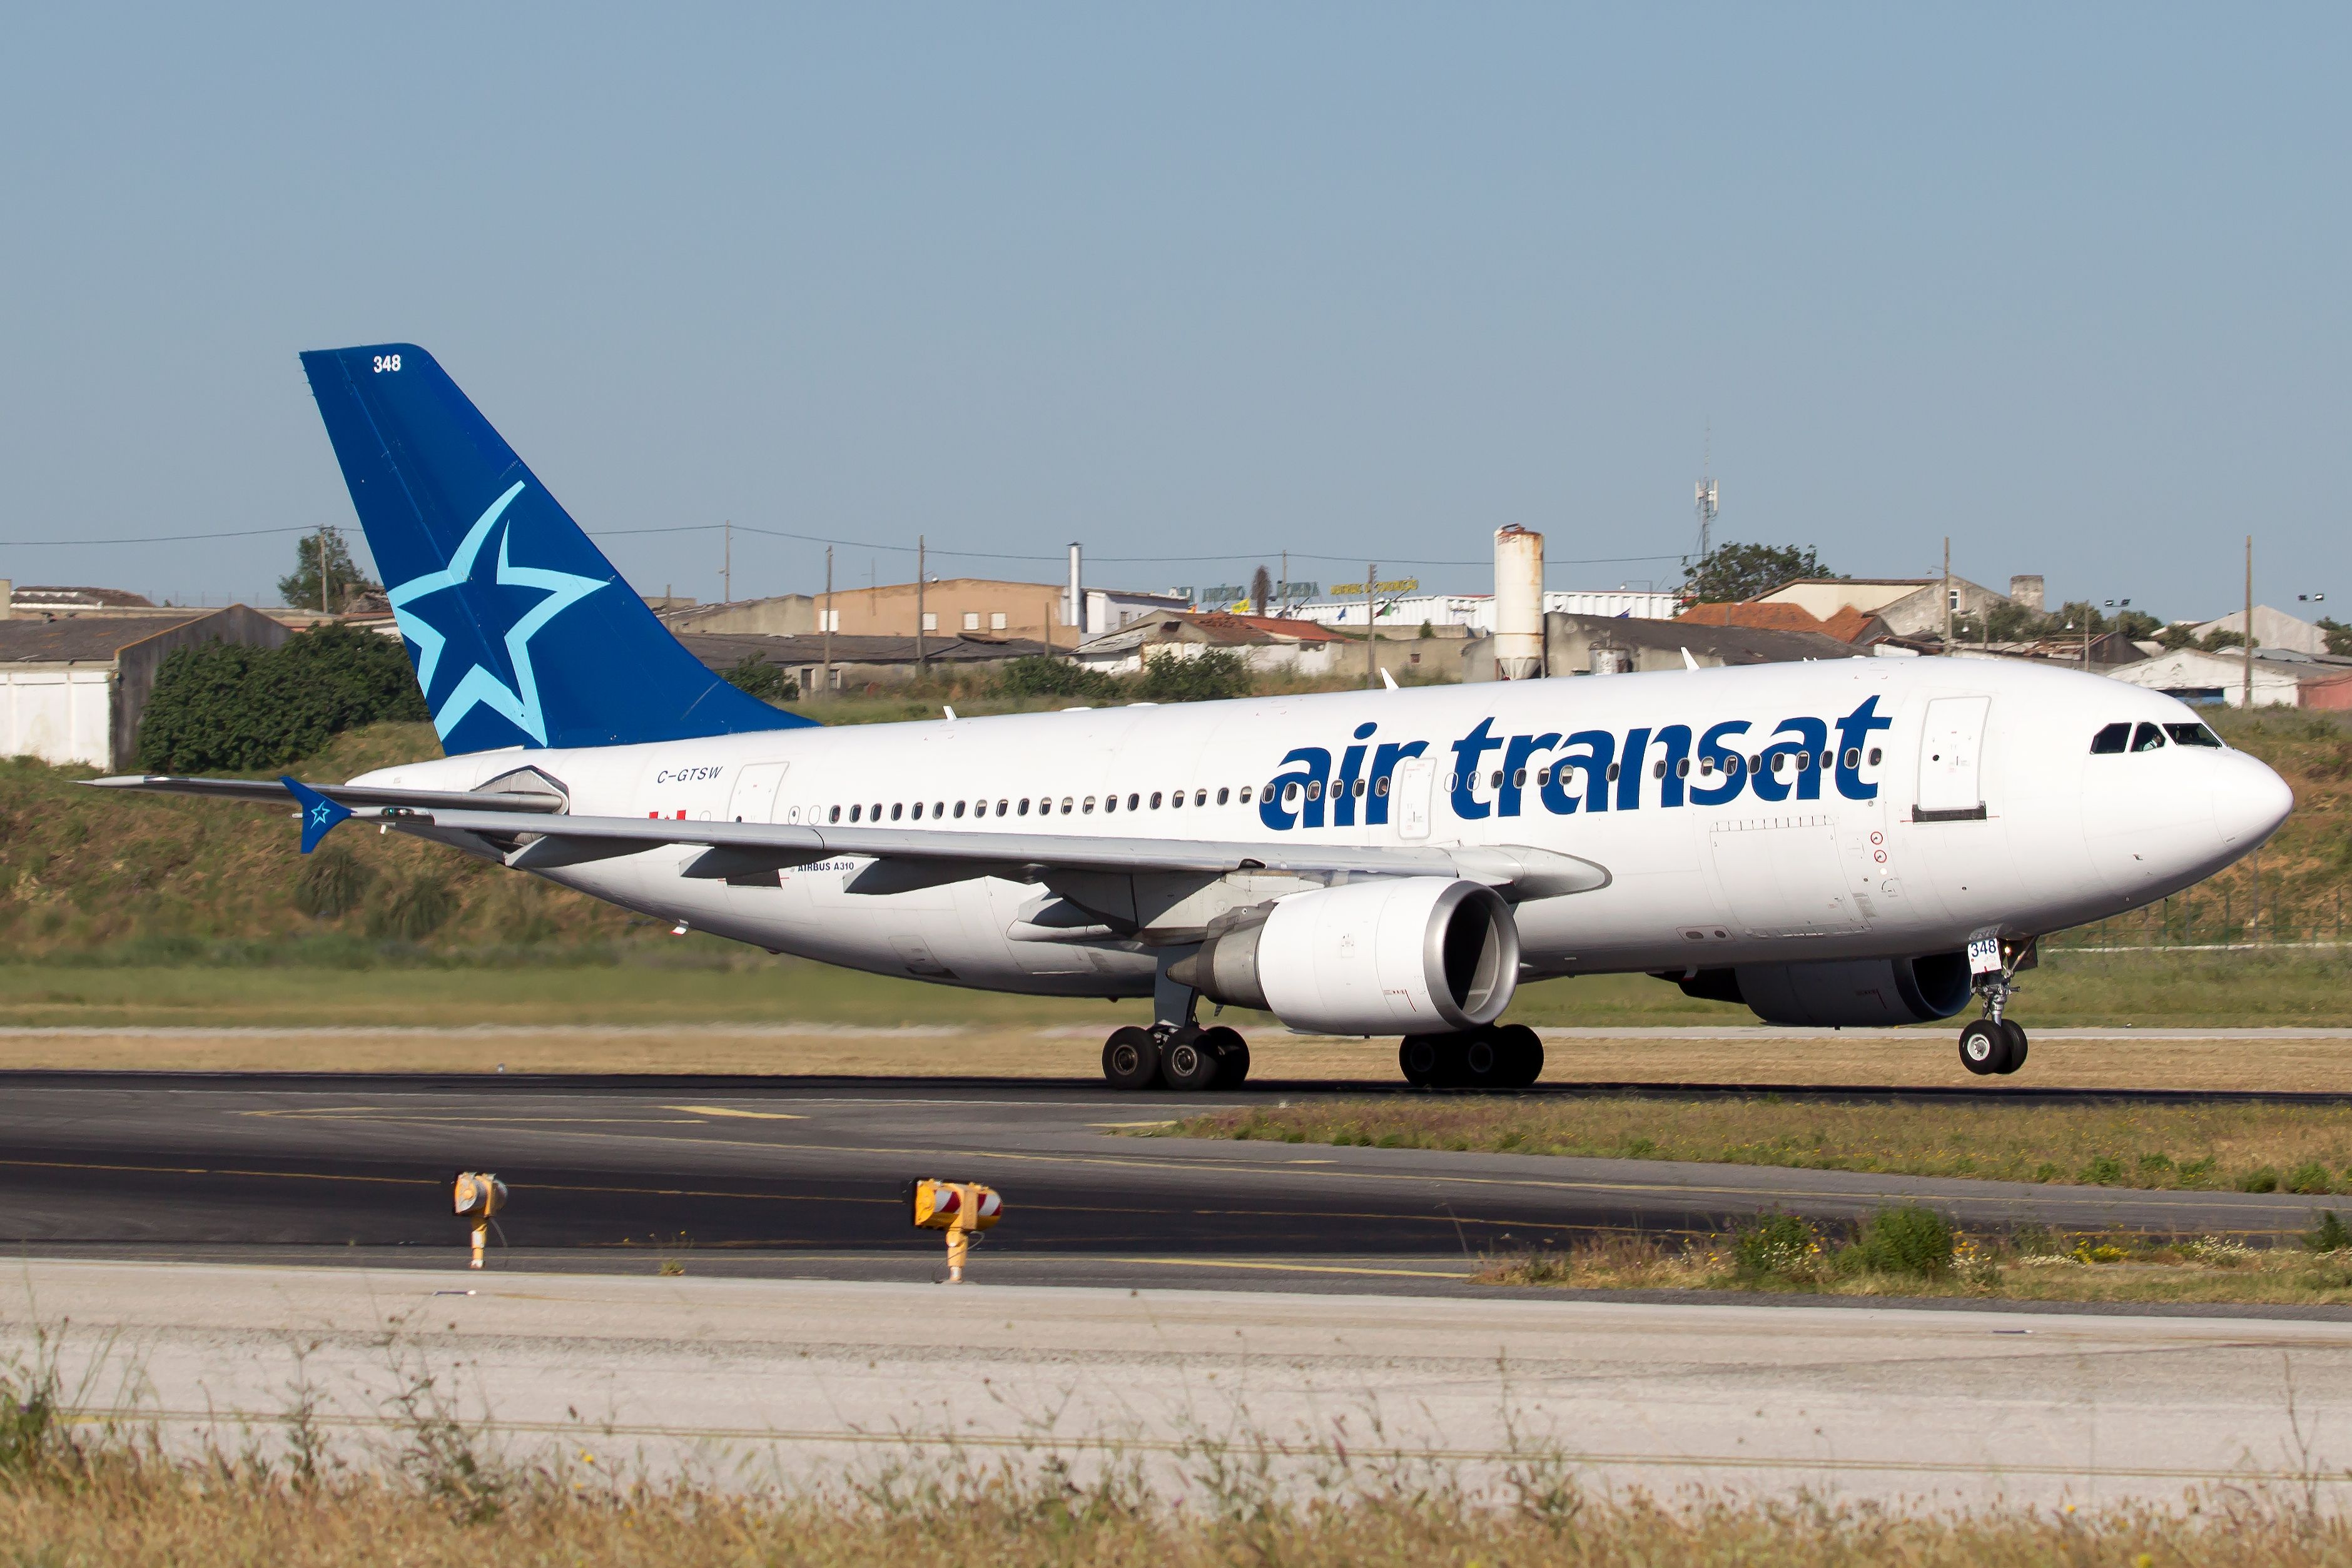 Air Transat Airbus A310 taking off